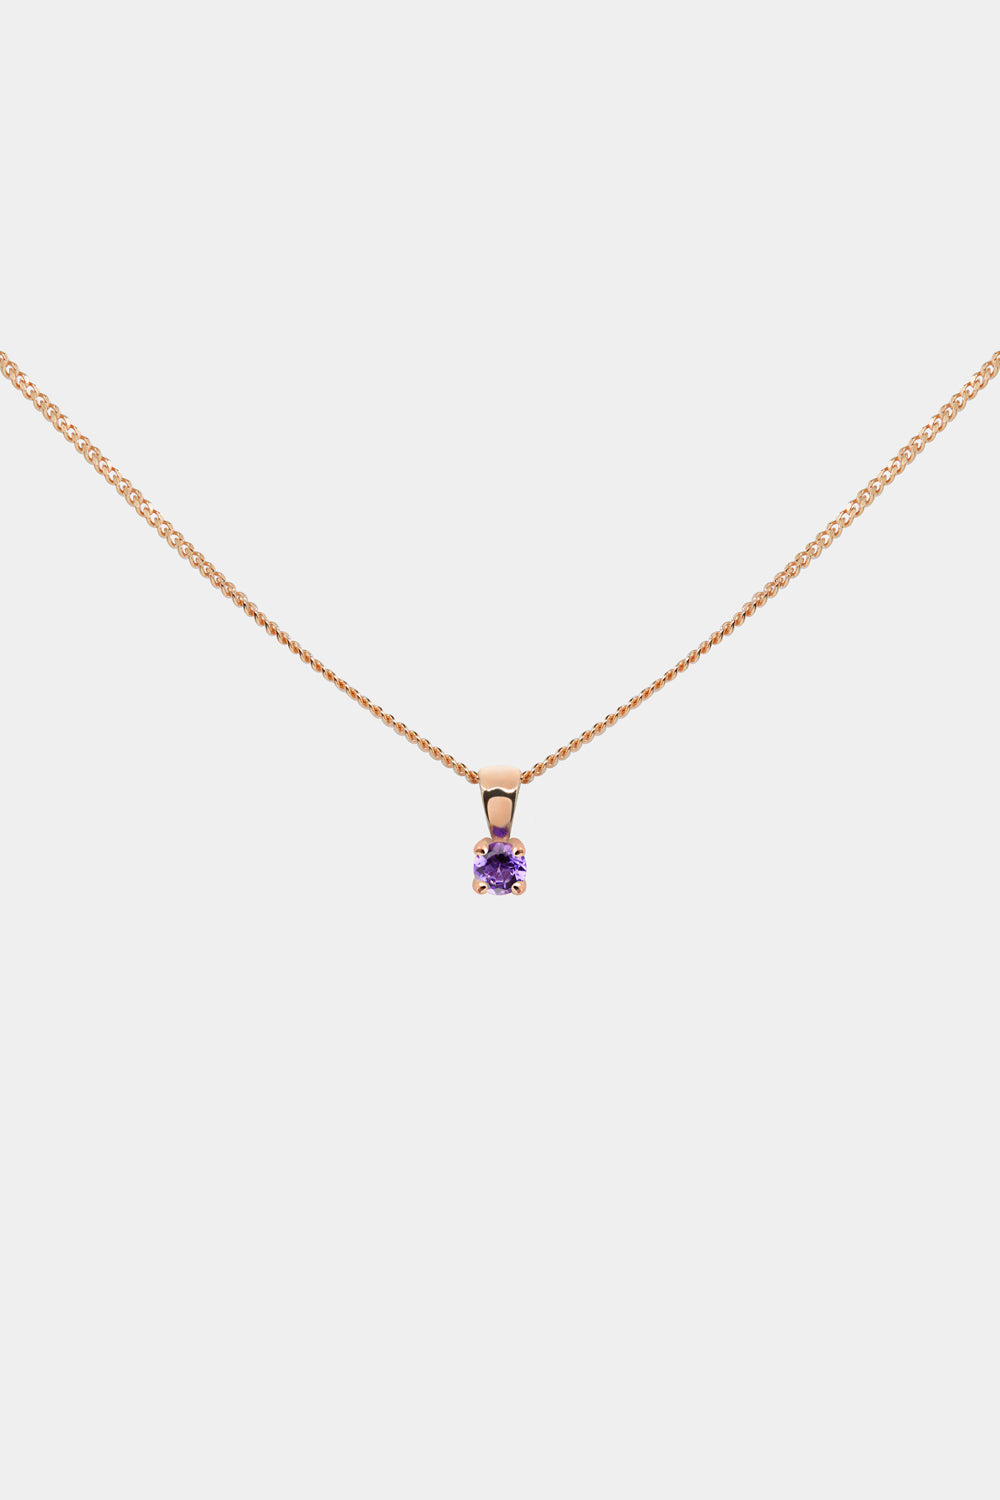 Birthstone Necklace | 9K Rose Gold